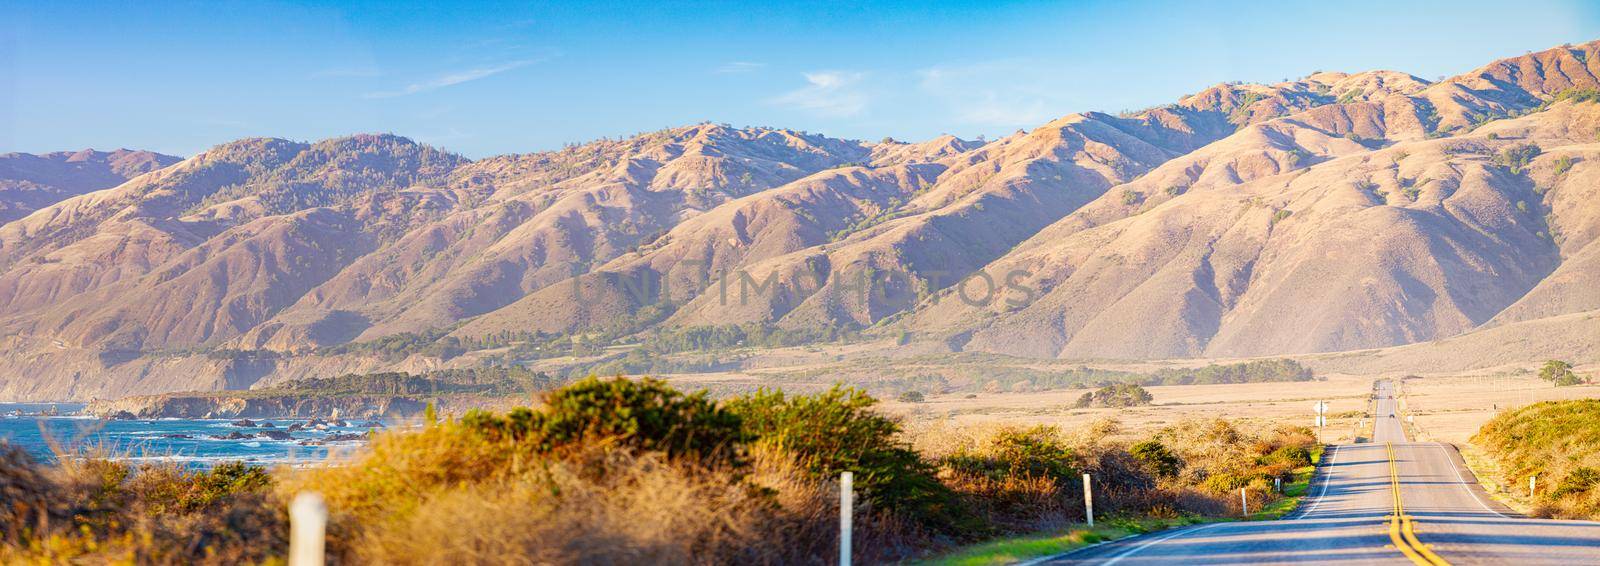 Highway at big sur coast california, usa by Yolshin